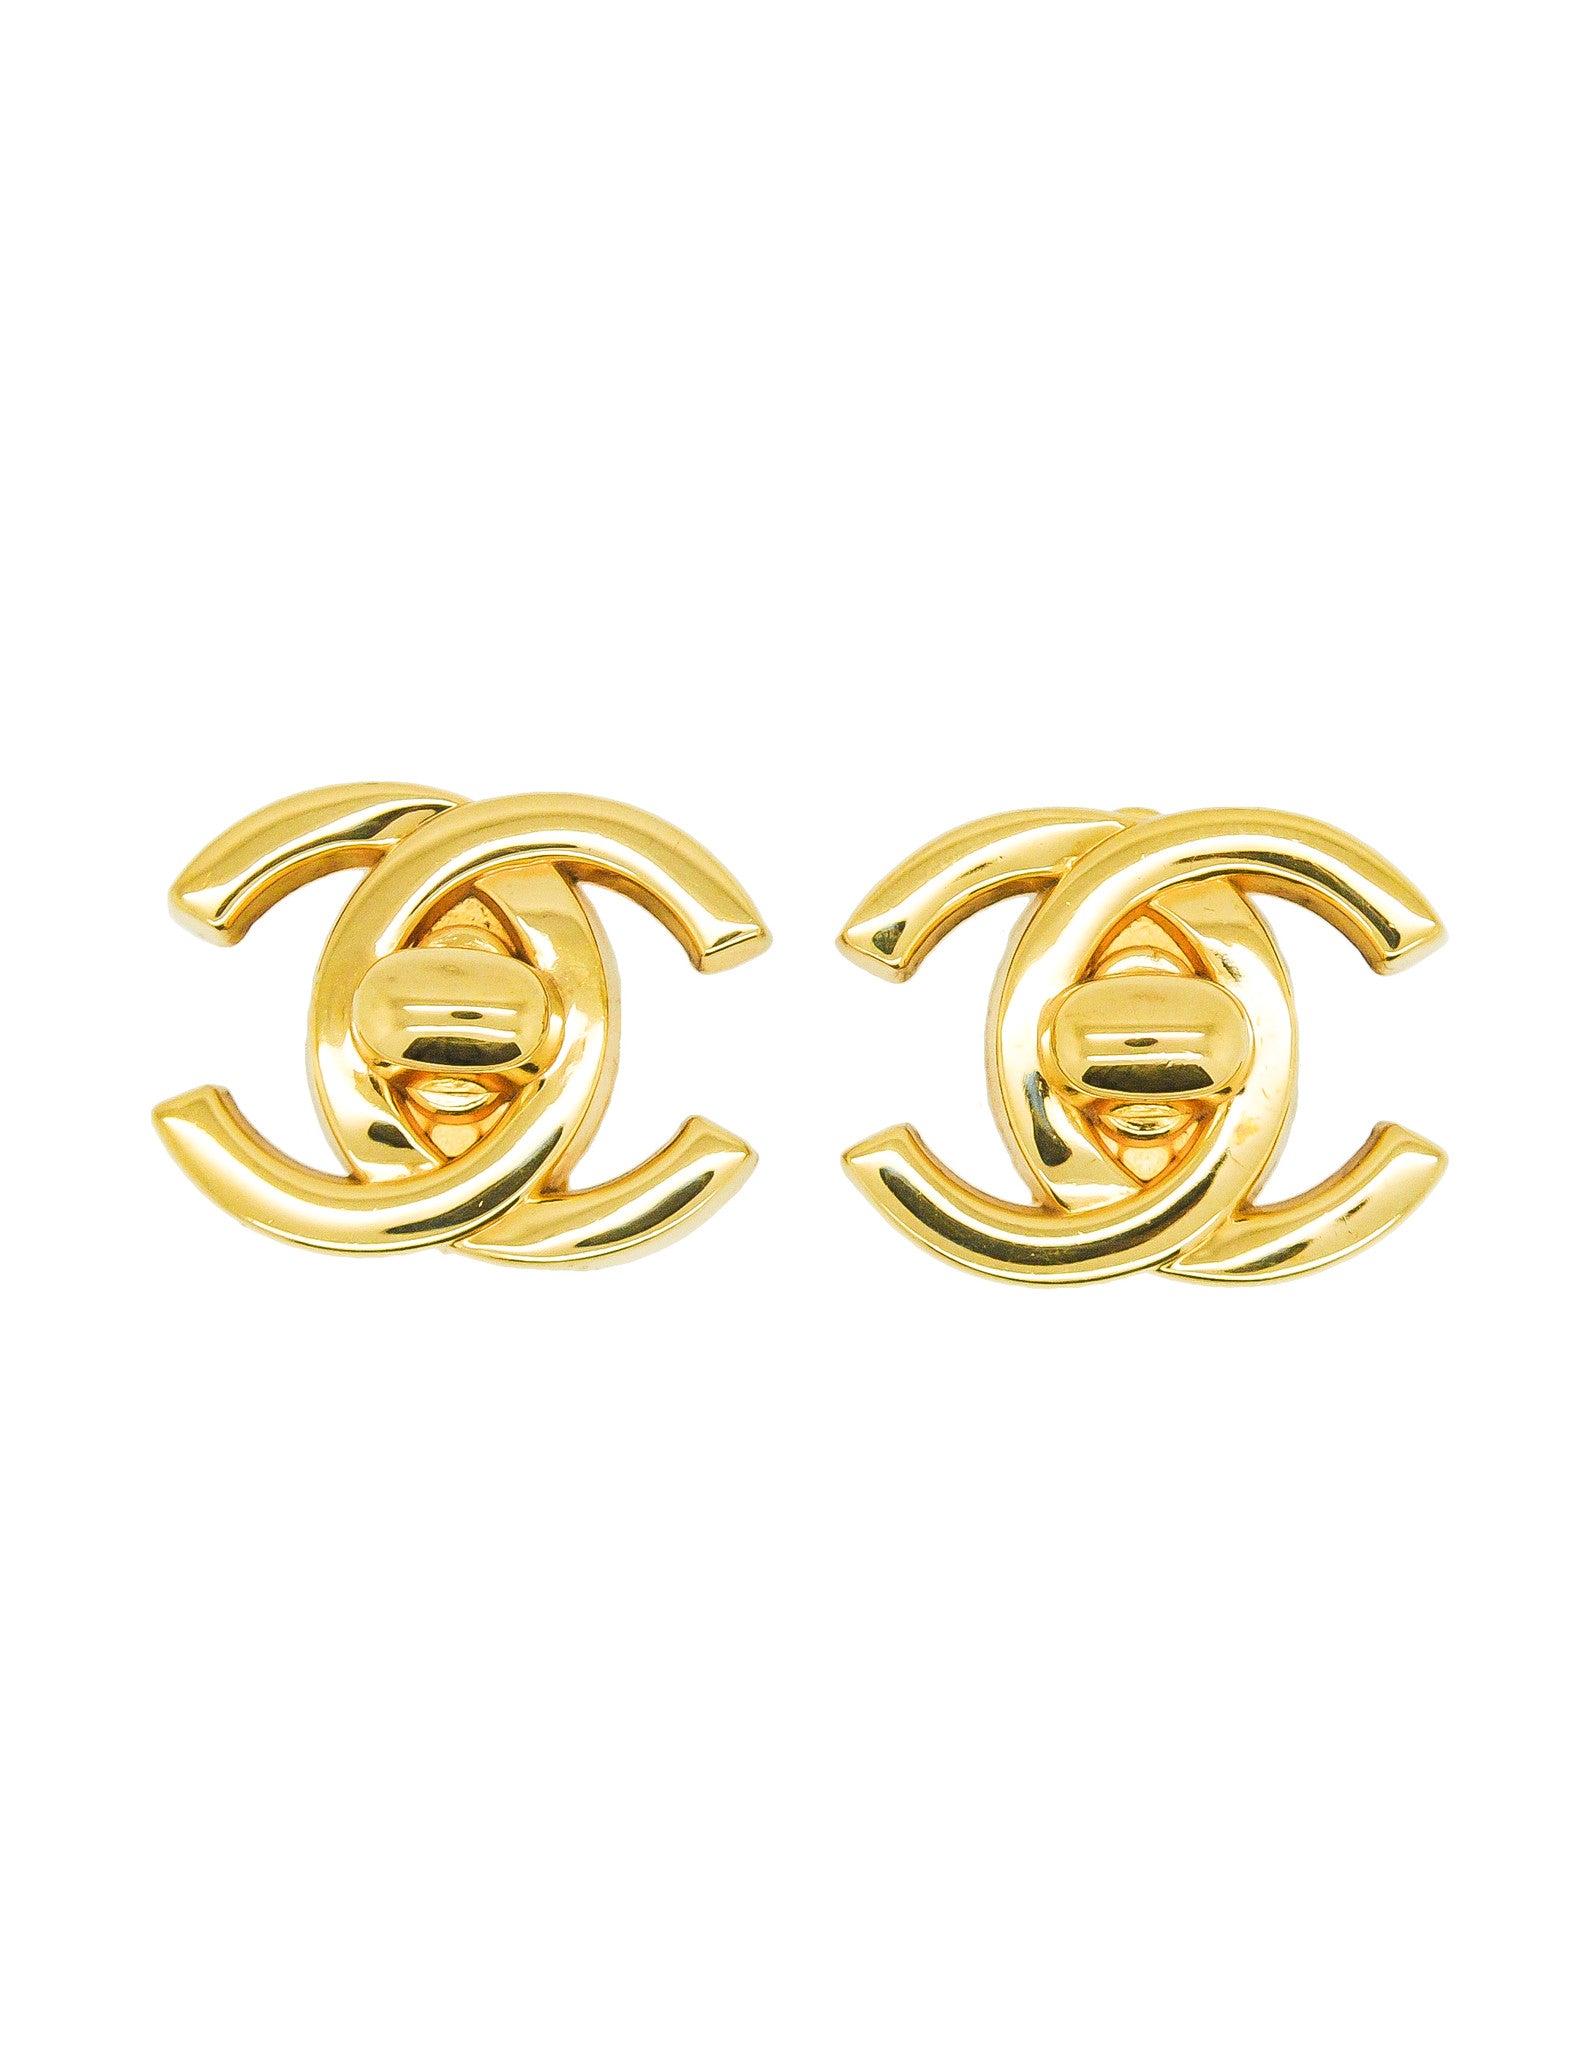 Chanel Vintage Turn Lock CC Clasp Earrings